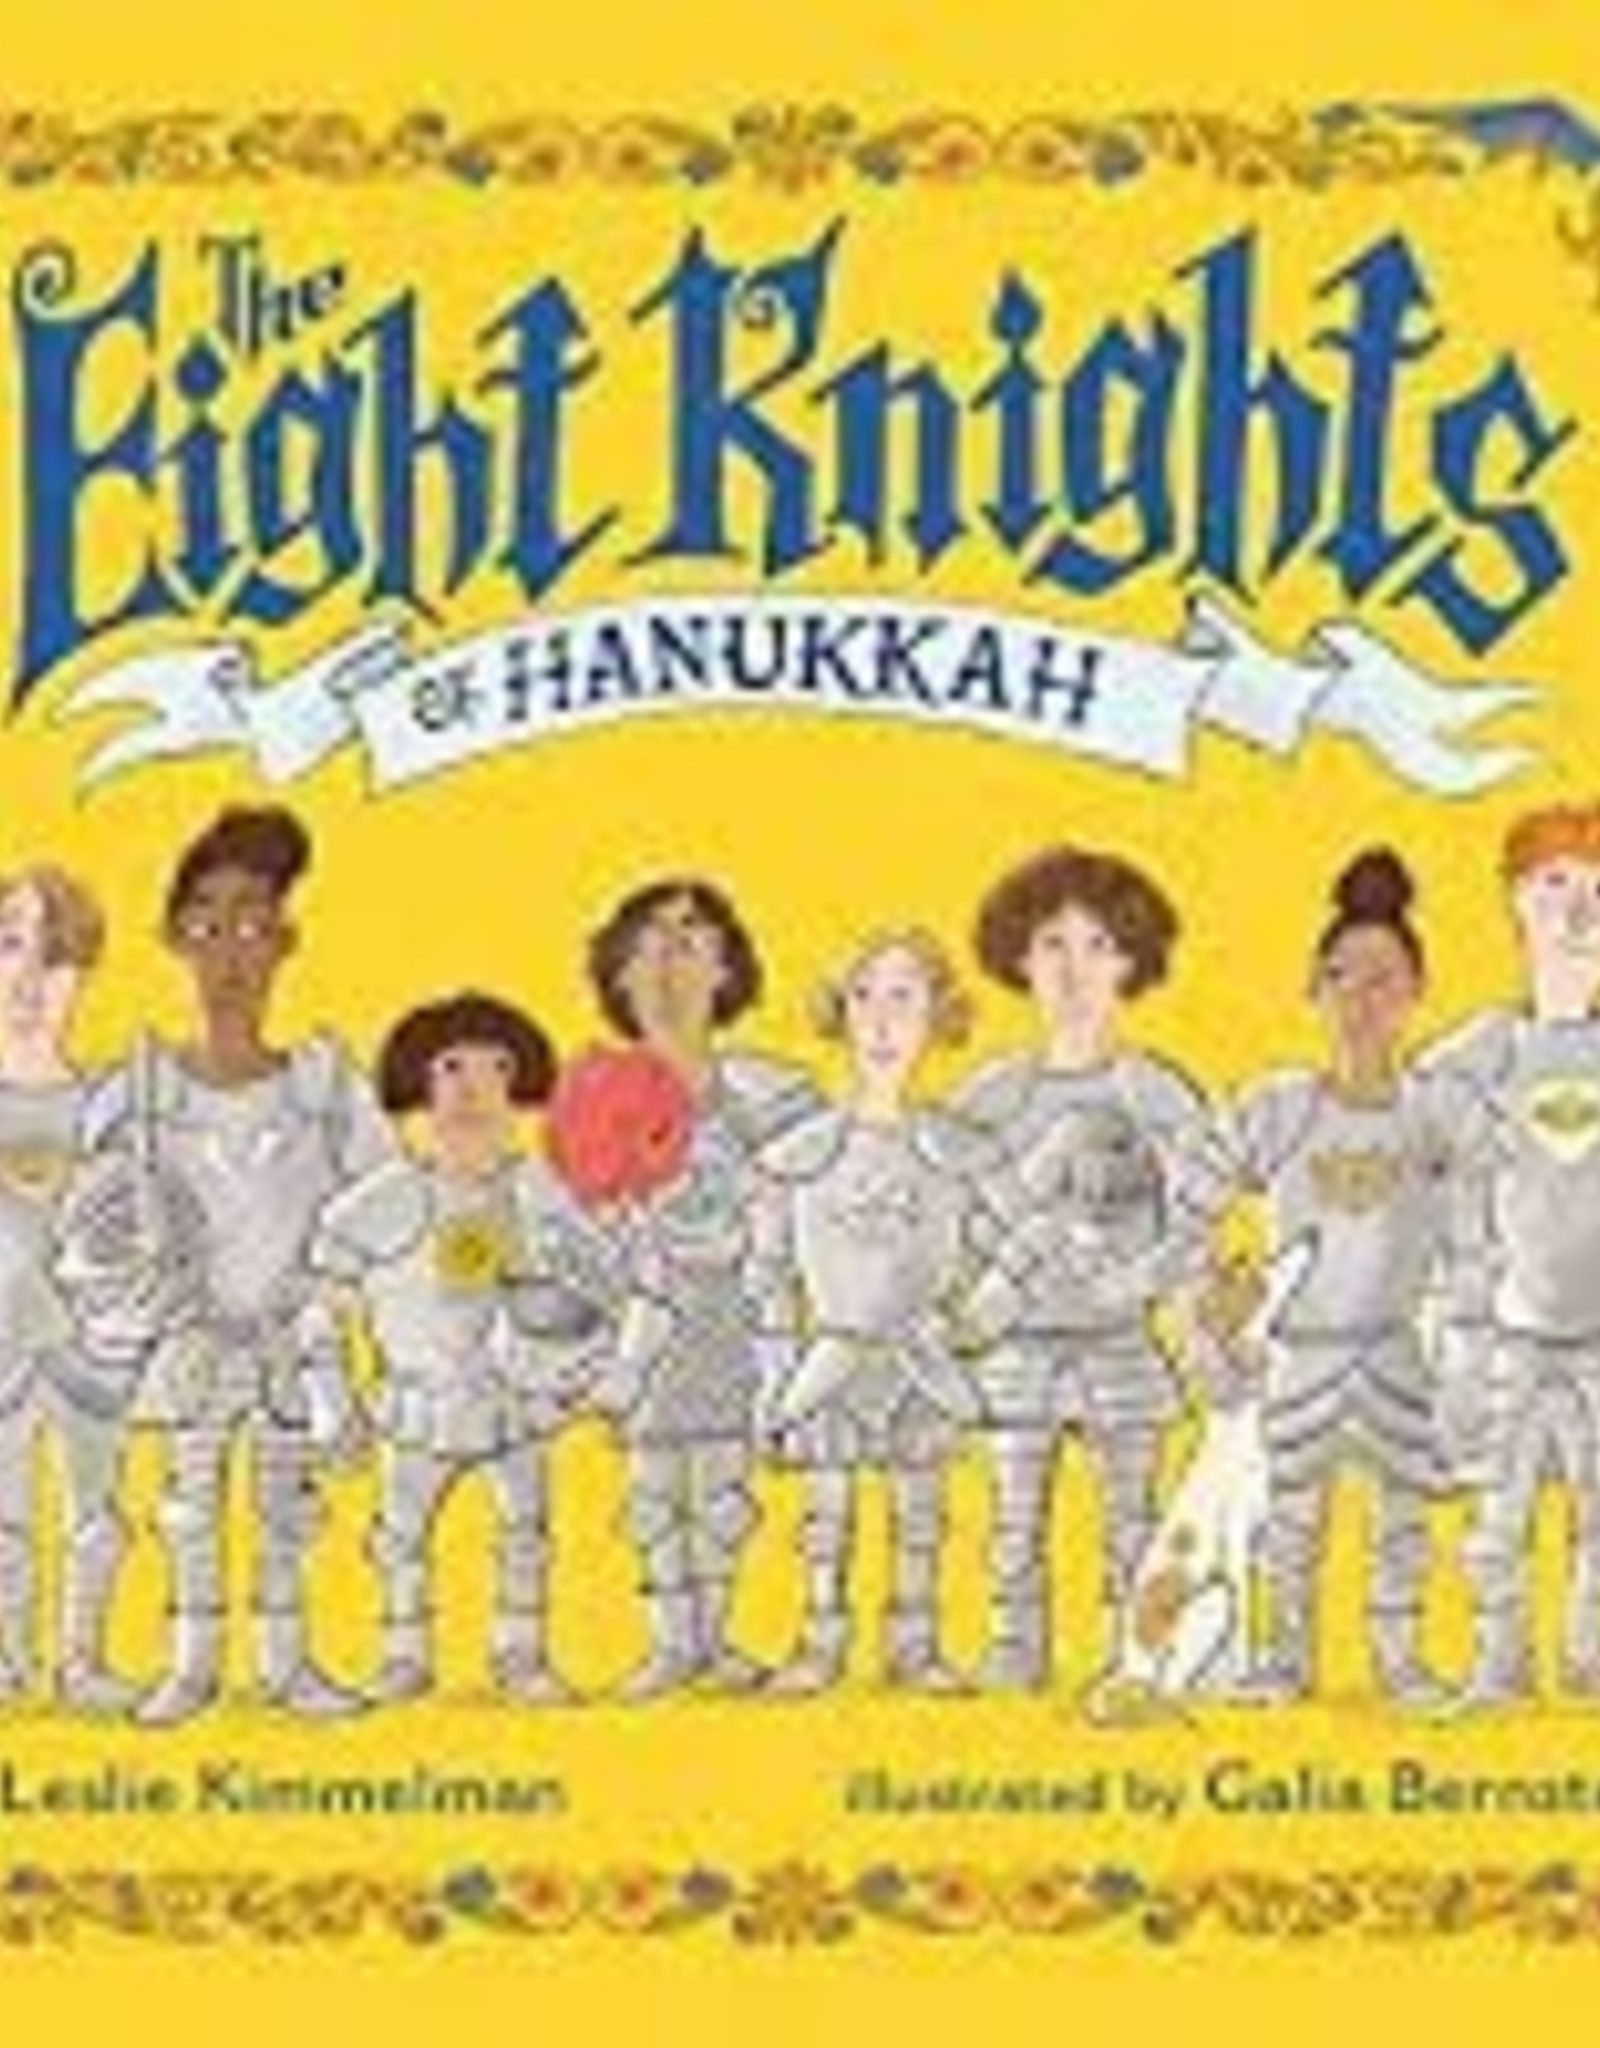 Random House/Penguin Eight Knights Of Hanukkah